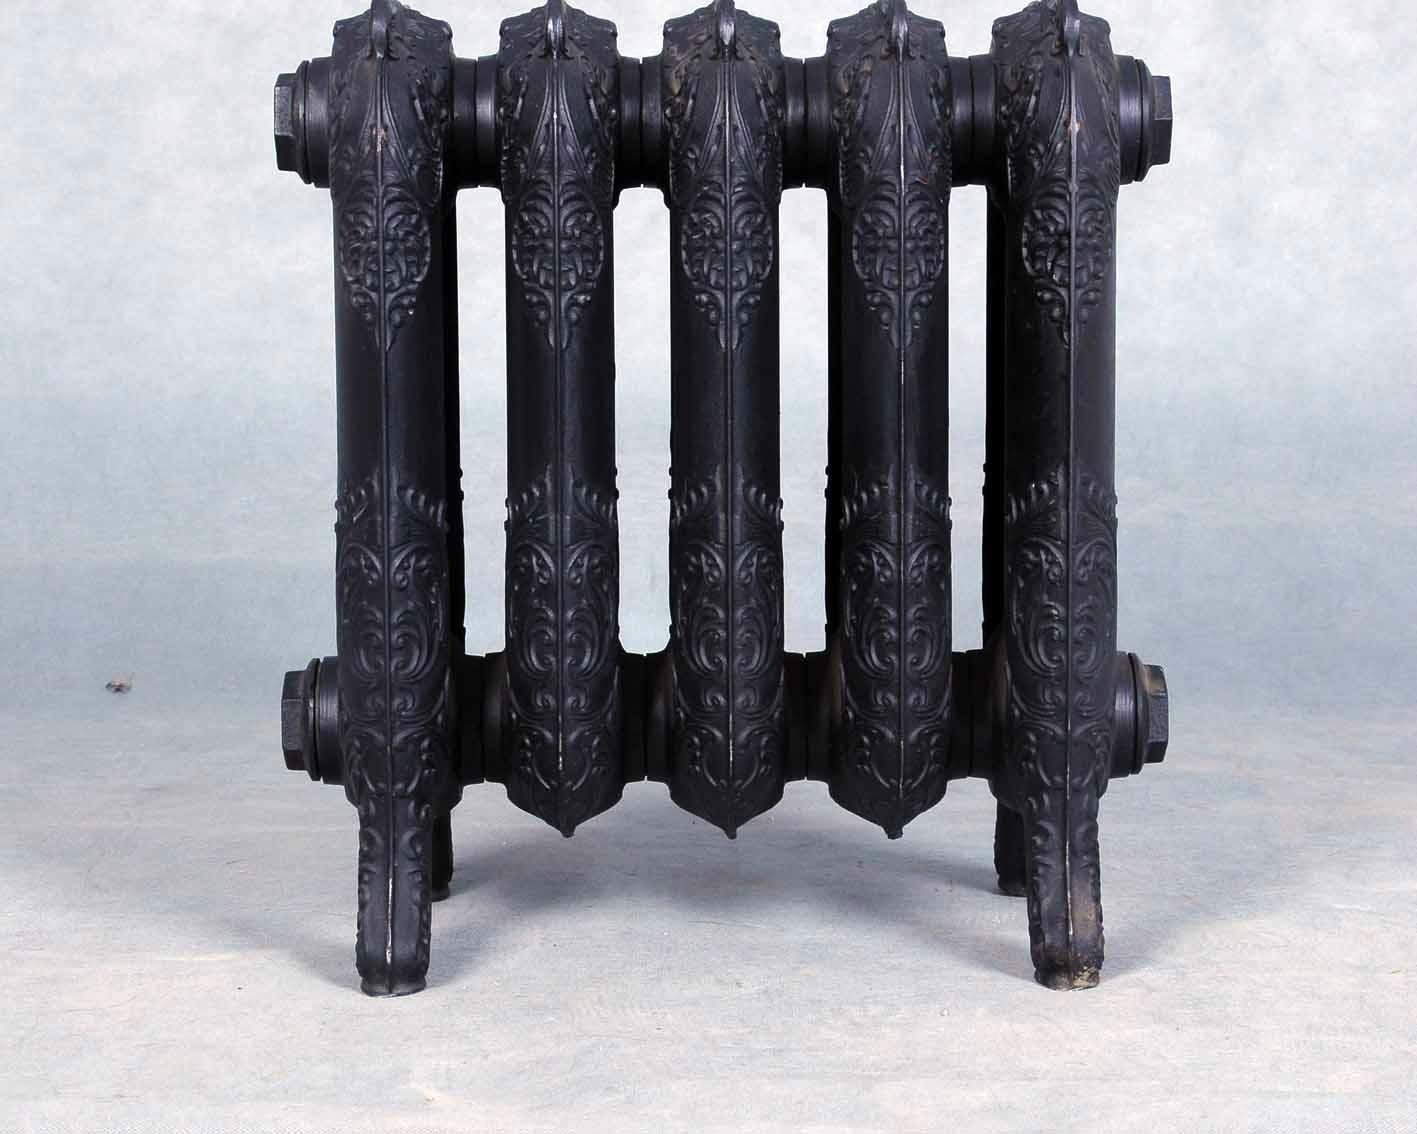 V3-350 cast iron radiator